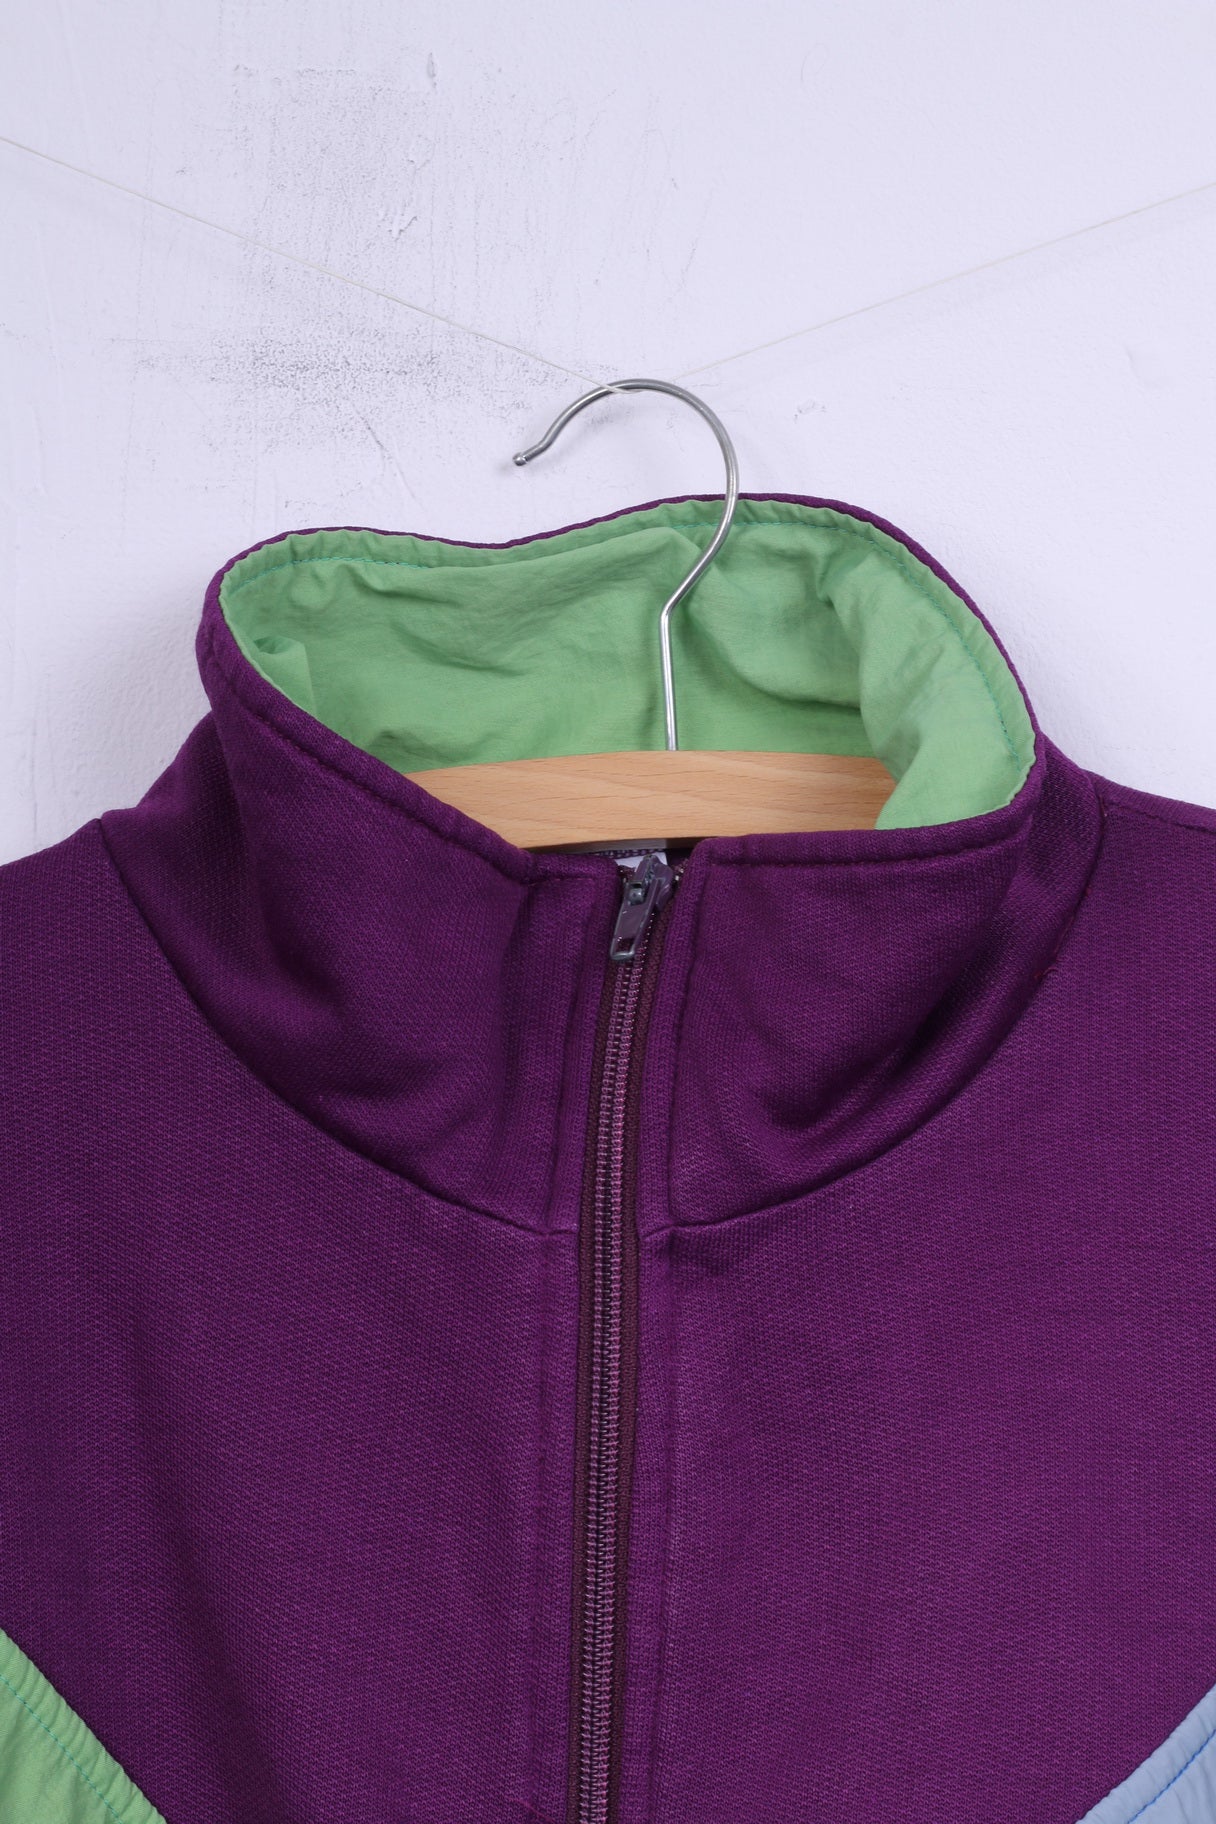 C&A Rodeo Mens XL 56-58 Sweatshirt Purple Sportswear Top Cotton Full Zipper